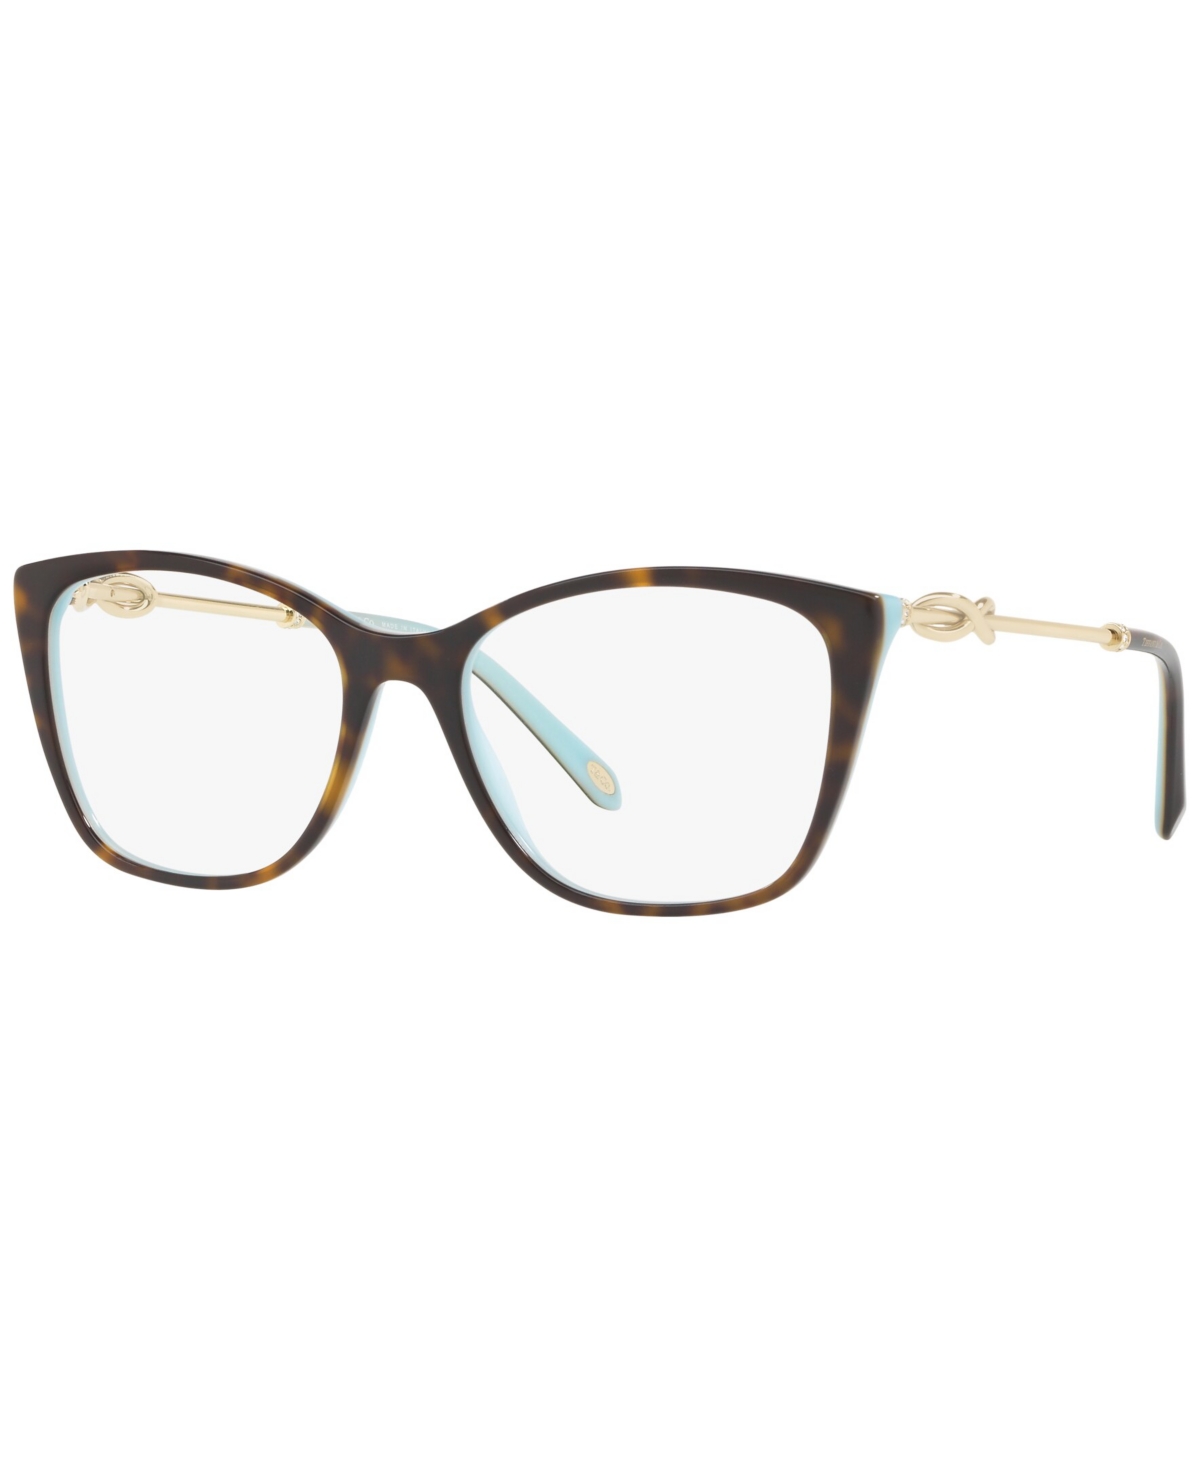 TF2160B Women's Square Eyeglasses - Havana On Tiffany Blue